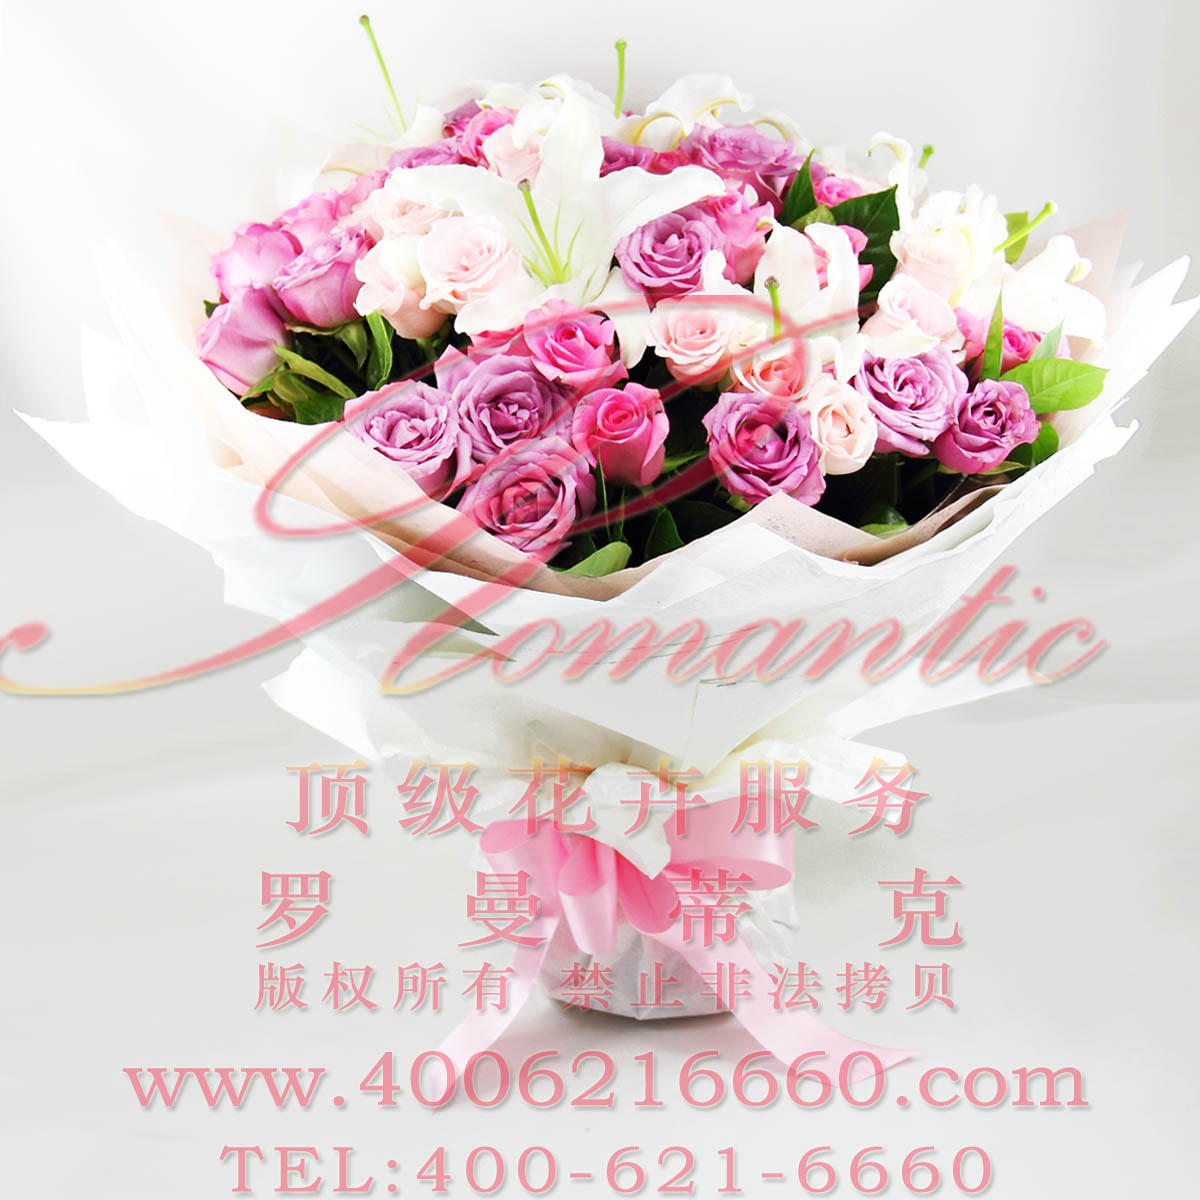 H803最美的回忆|60粉桃紫玫瑰10白百合|北京祝福生日花束鲜花速递